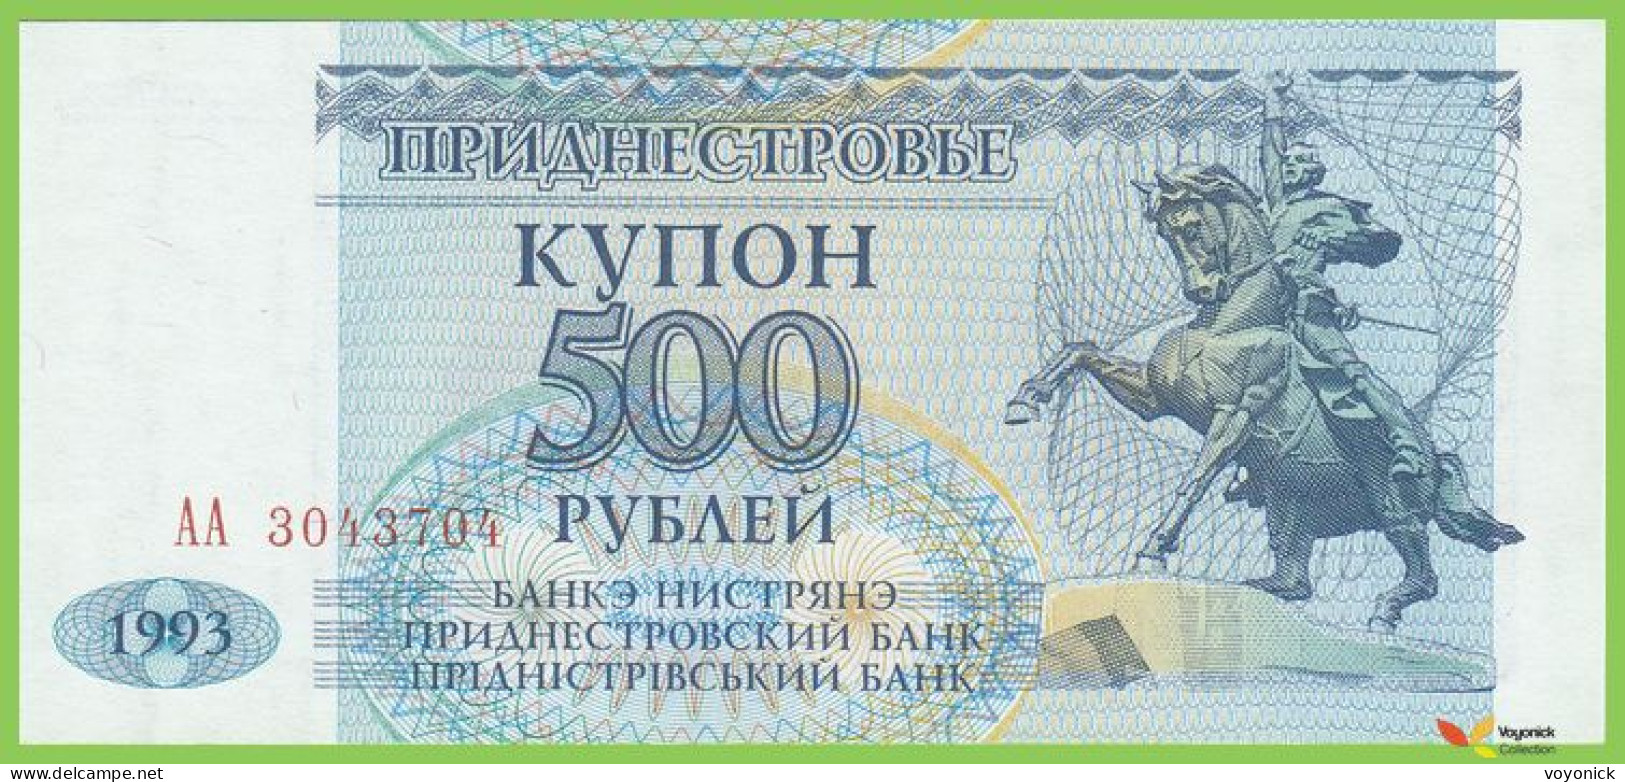 Voyo MOLDOVA (Transdniester) 500 Rubley 1993(1994) P22 B124a АA UNC - Moldavië